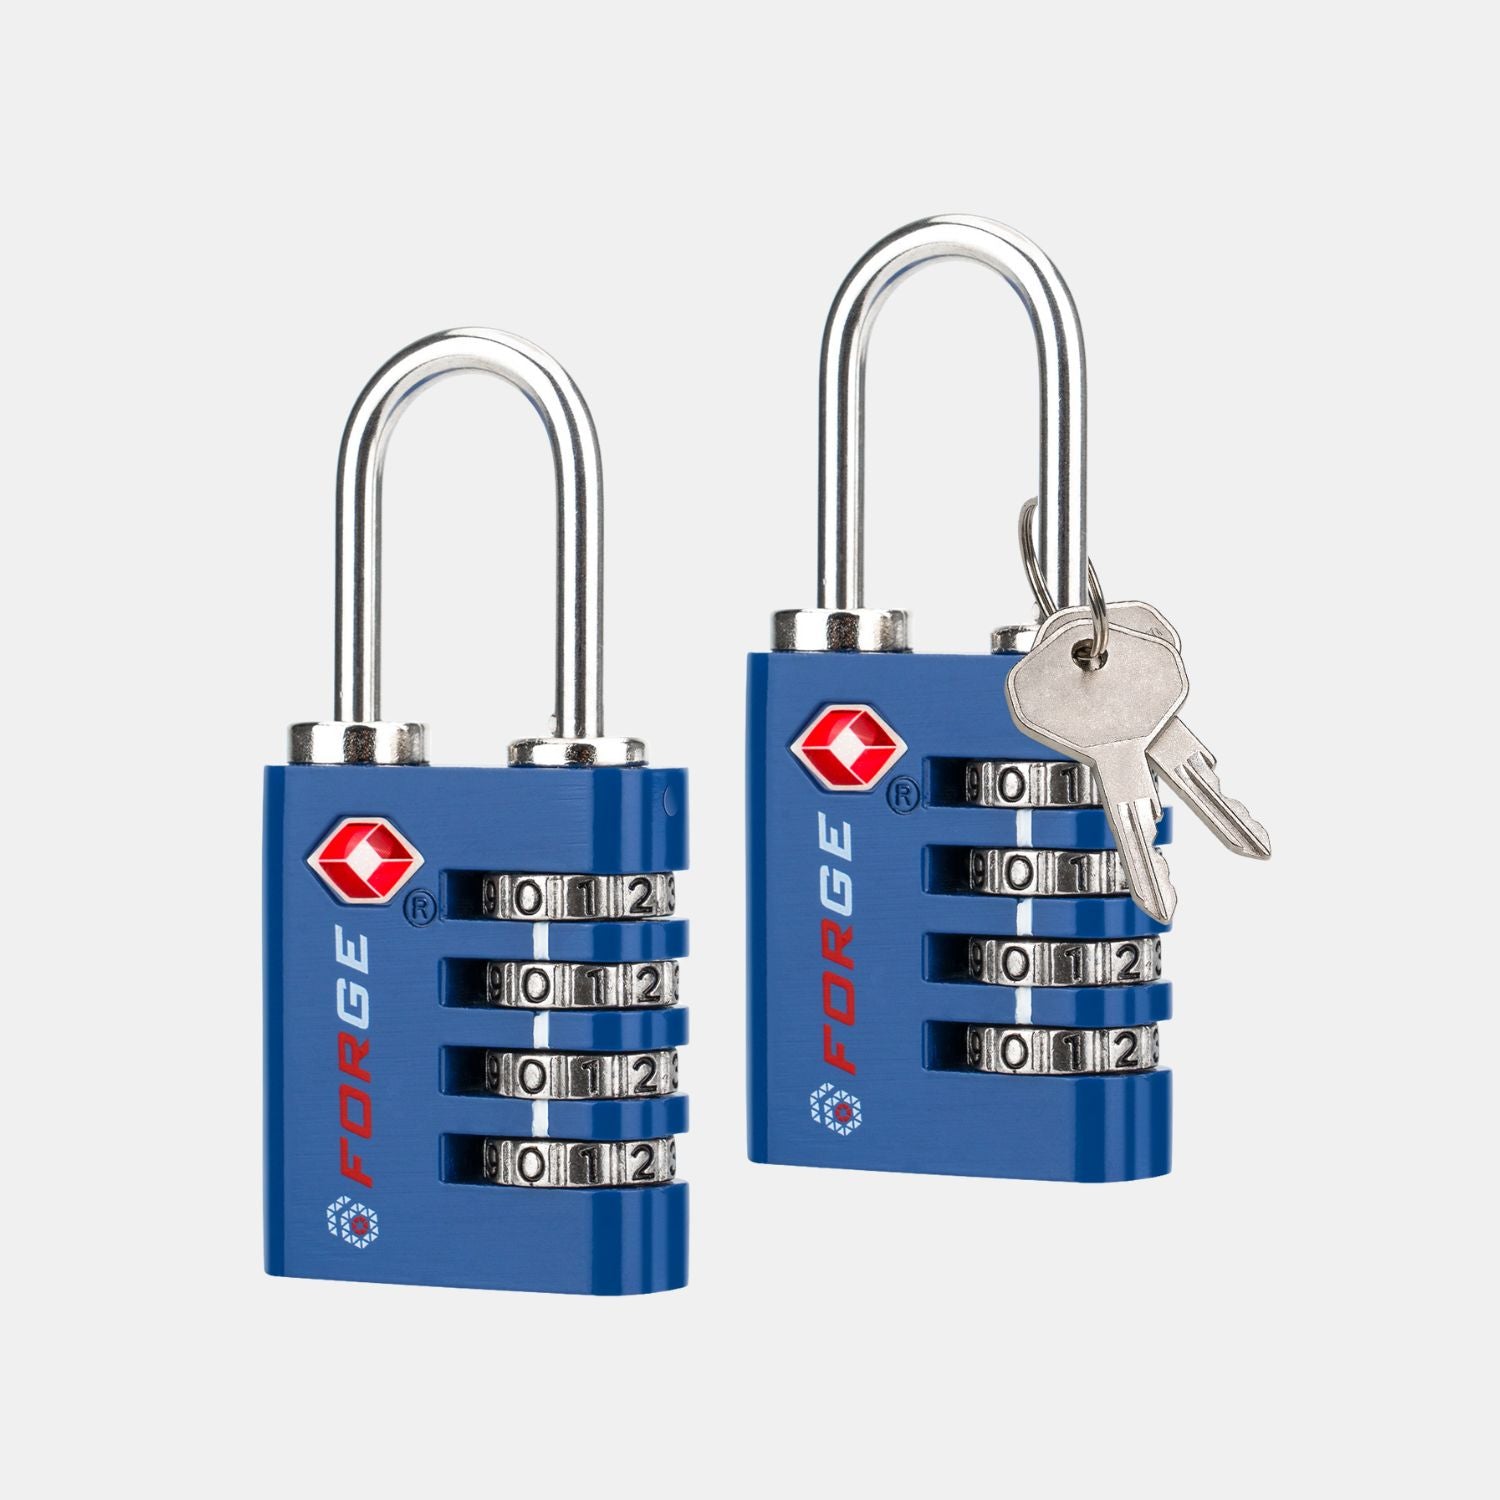 Dual-Opening TSA Approved Luggage Lock: Key or Combination Access, Heavy Duty. 2 Blue Locks